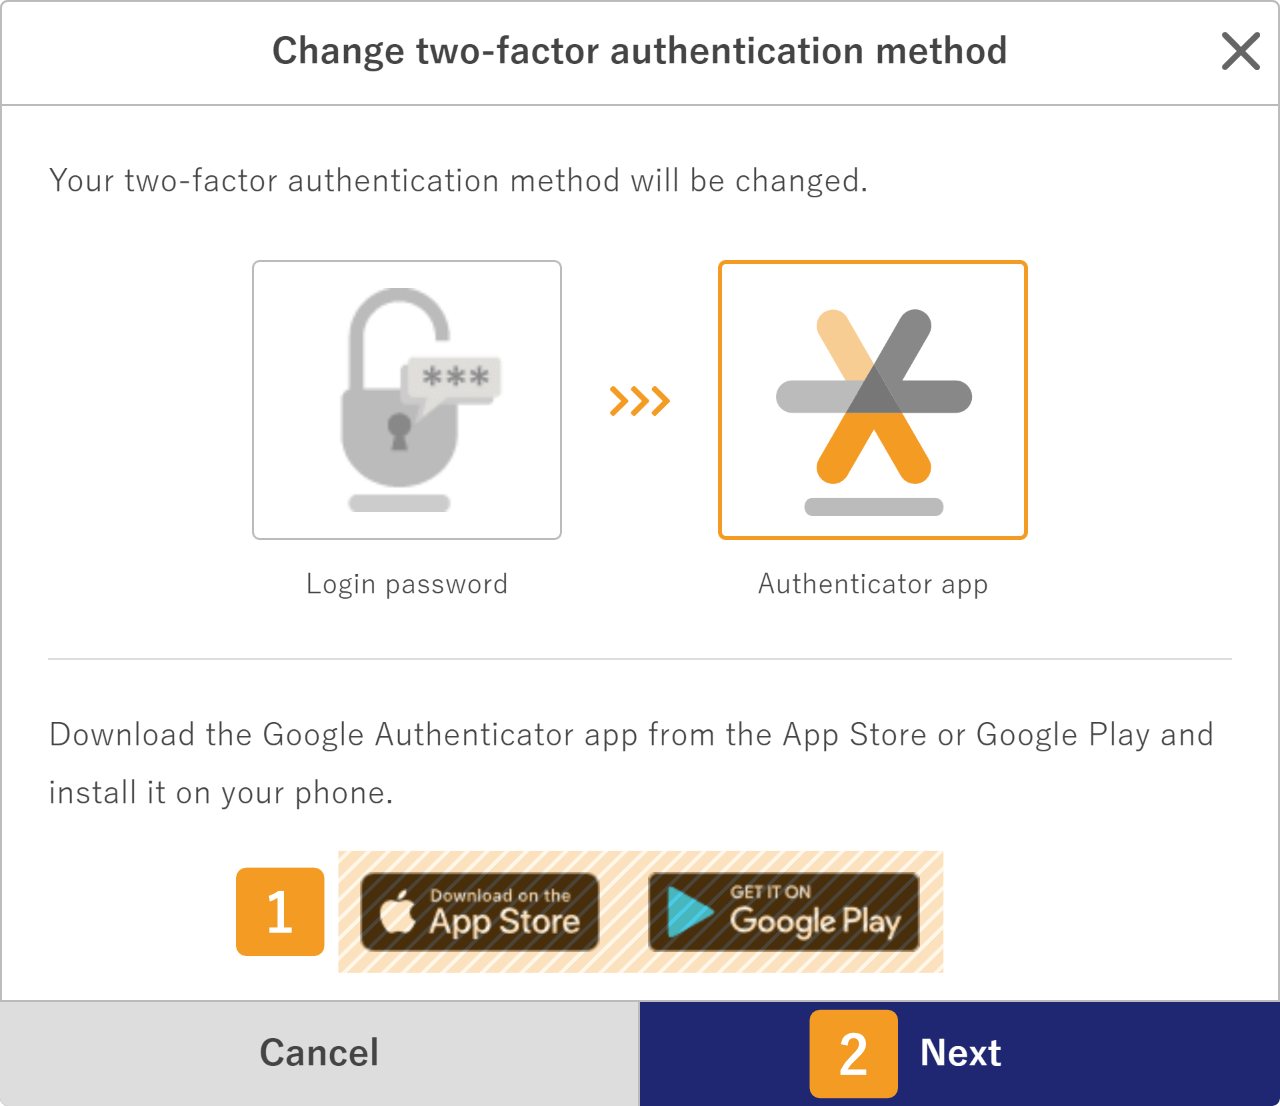 Download the Google Authenticator app